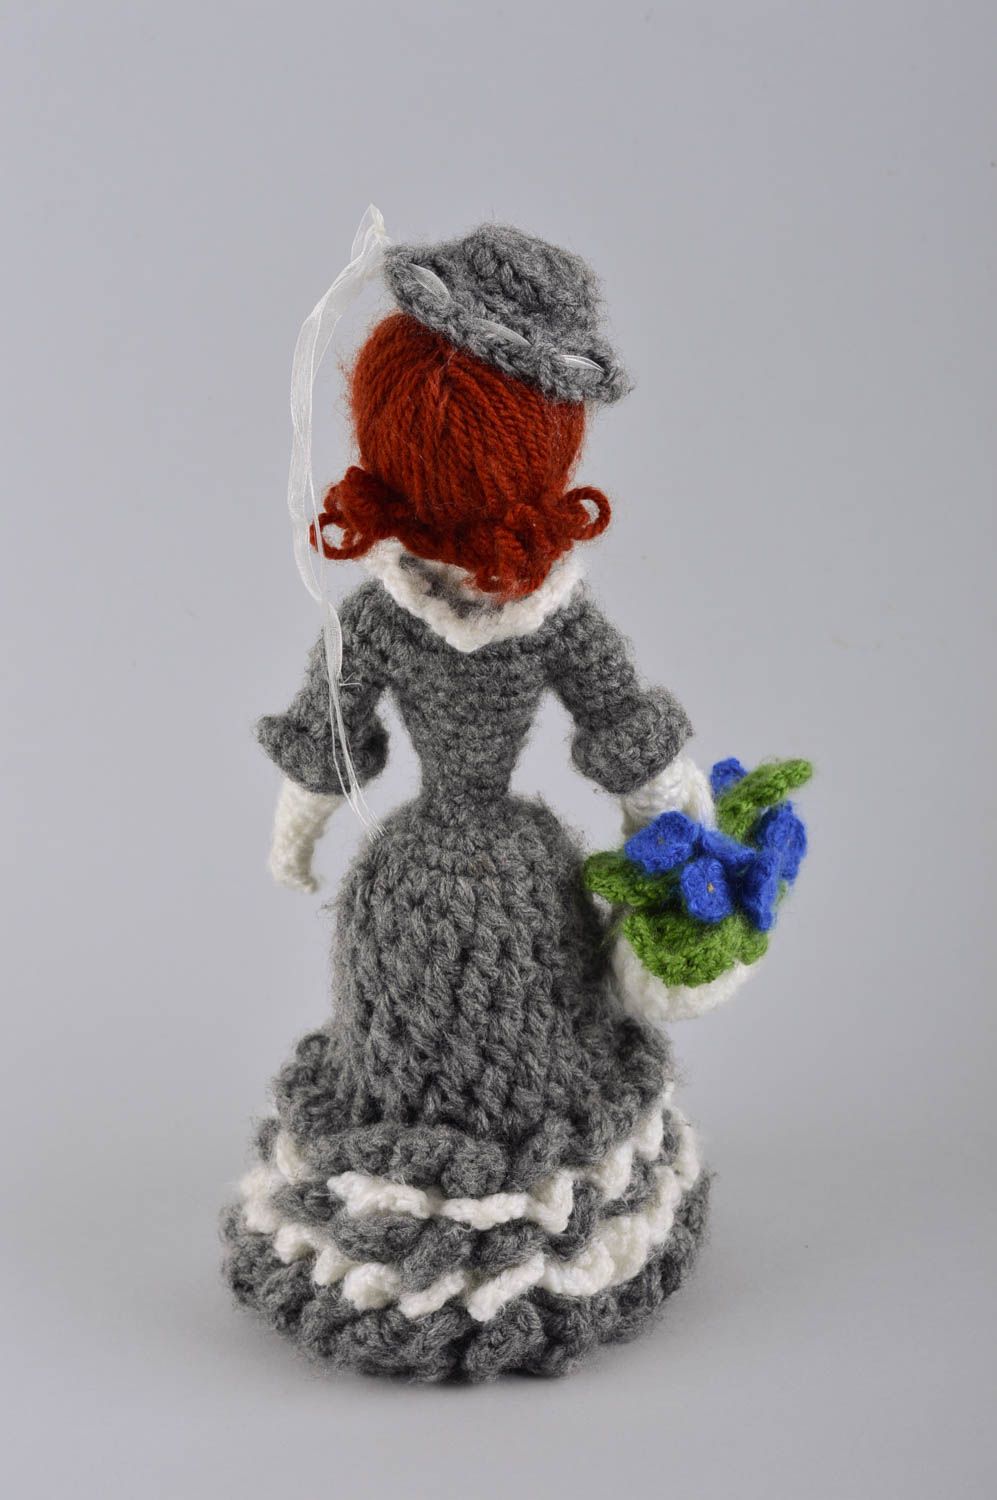 Crochet doll decorative stuffed doll handmade soft toy for children home decor photo 4